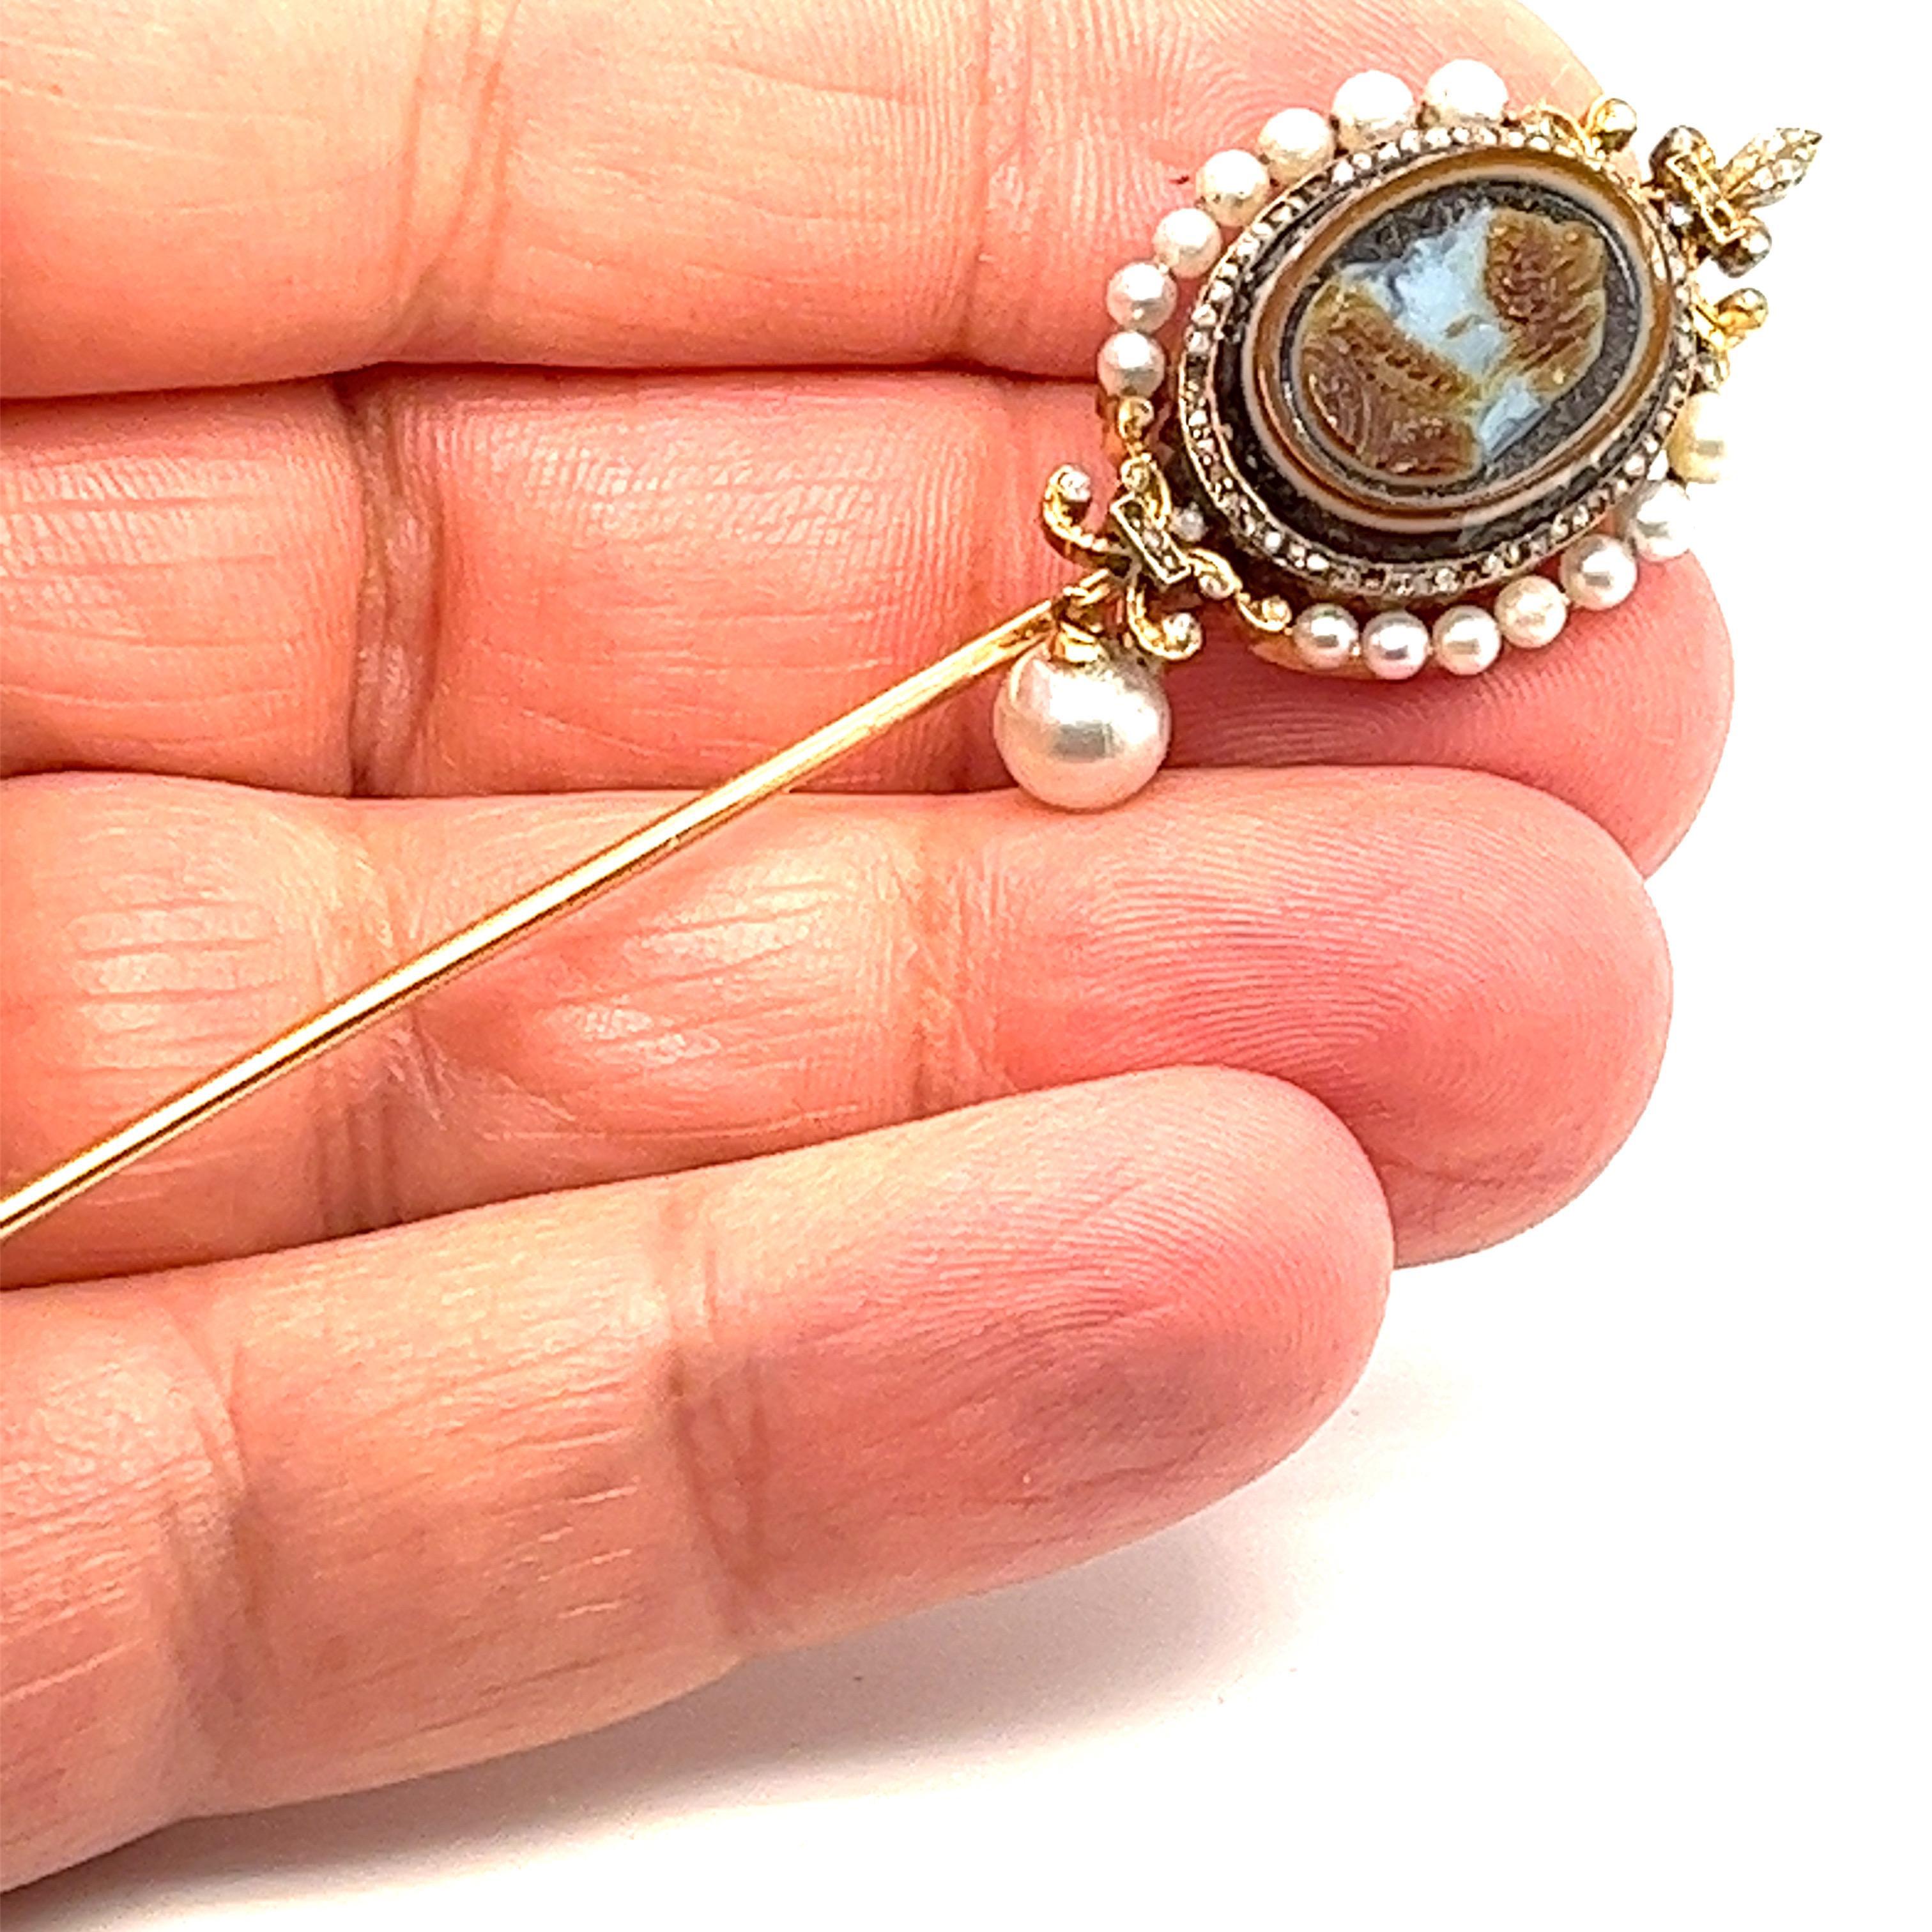 Rare Antique Sardonyx Cameo Pin - 18K Gold, Diamonds, and Pearls, Circa 1850. For Sale 2